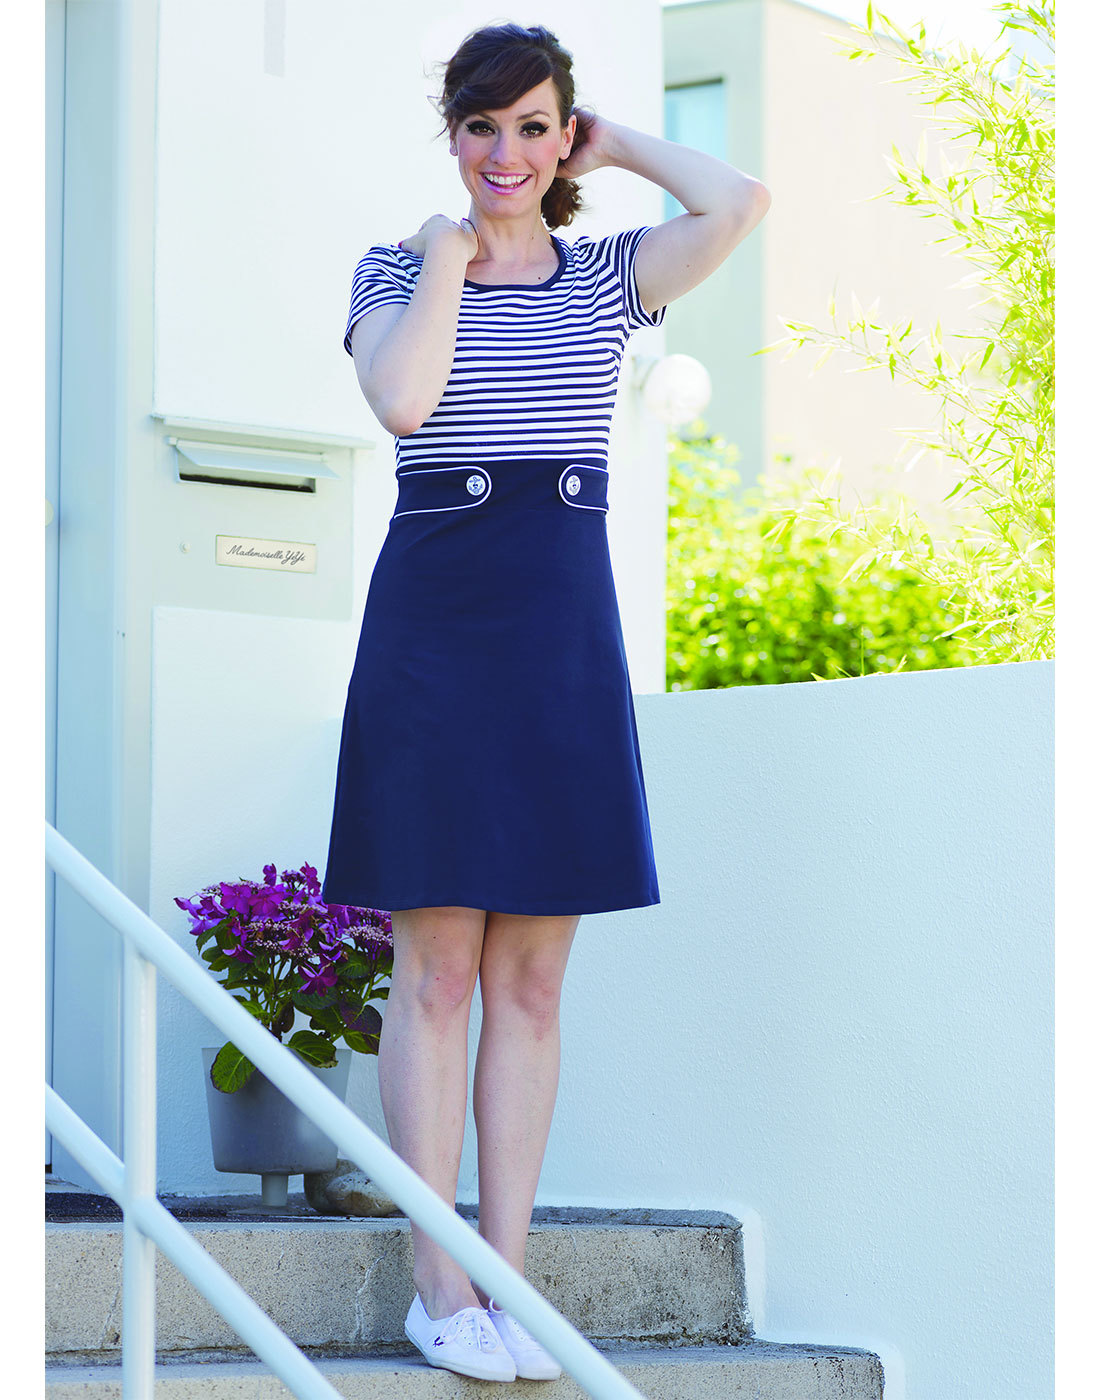 Isla MADEMOISELLE YEYE Retro 60s Stripe Mod Dress 